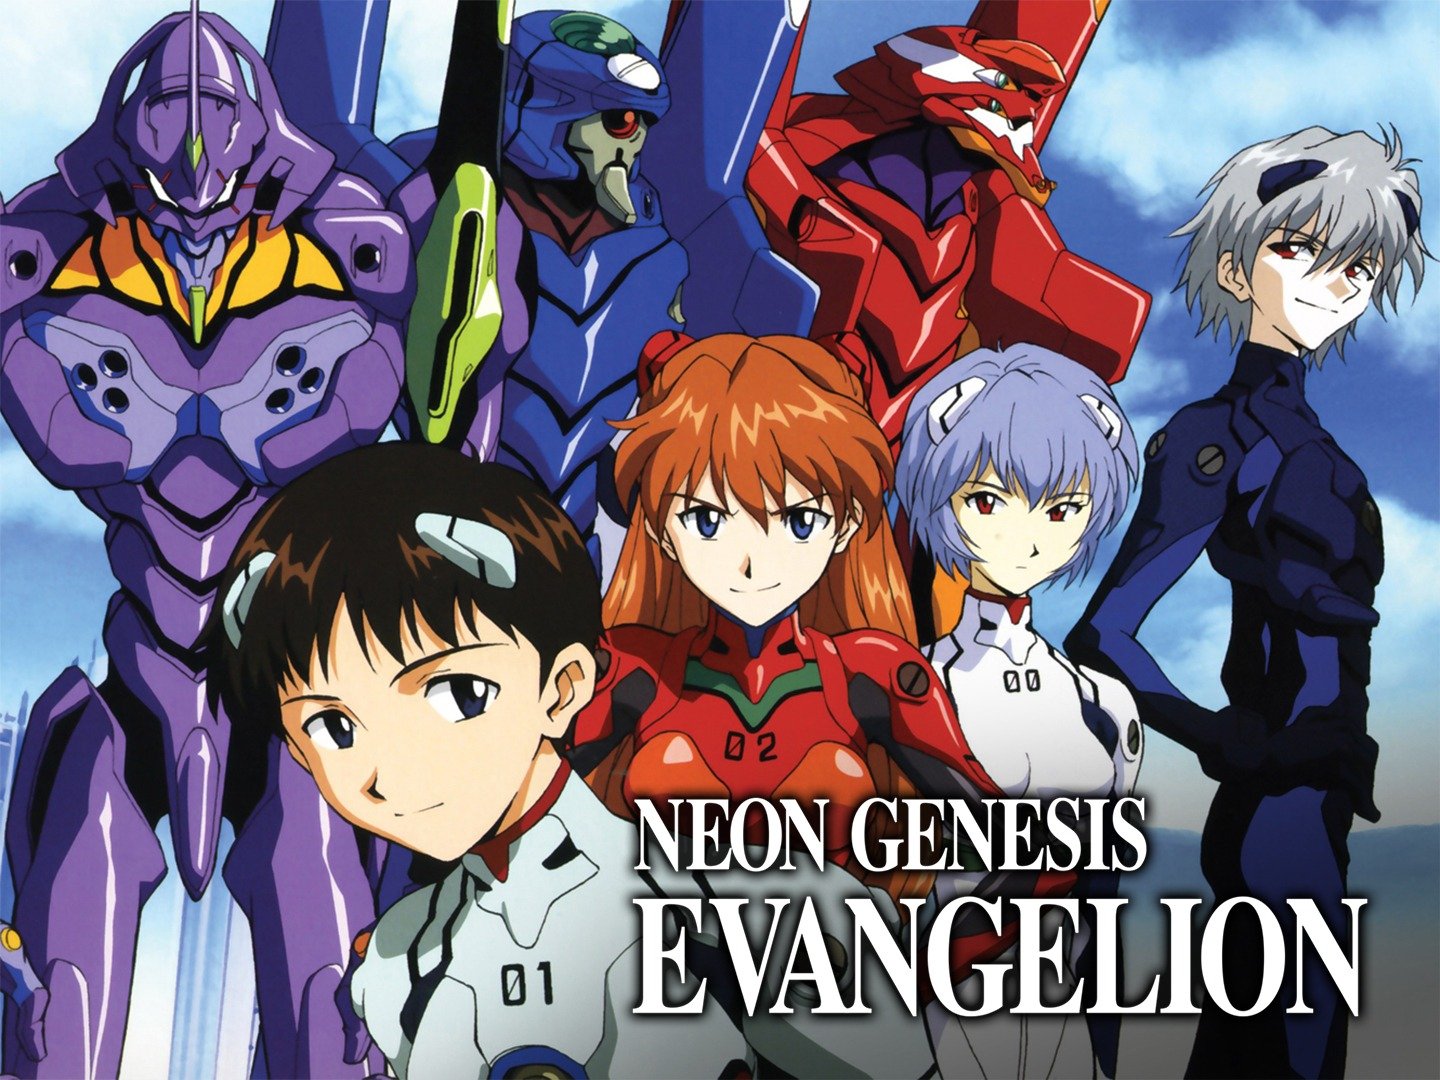 VIZ | The Official Website for Neon Genesis Evangelion